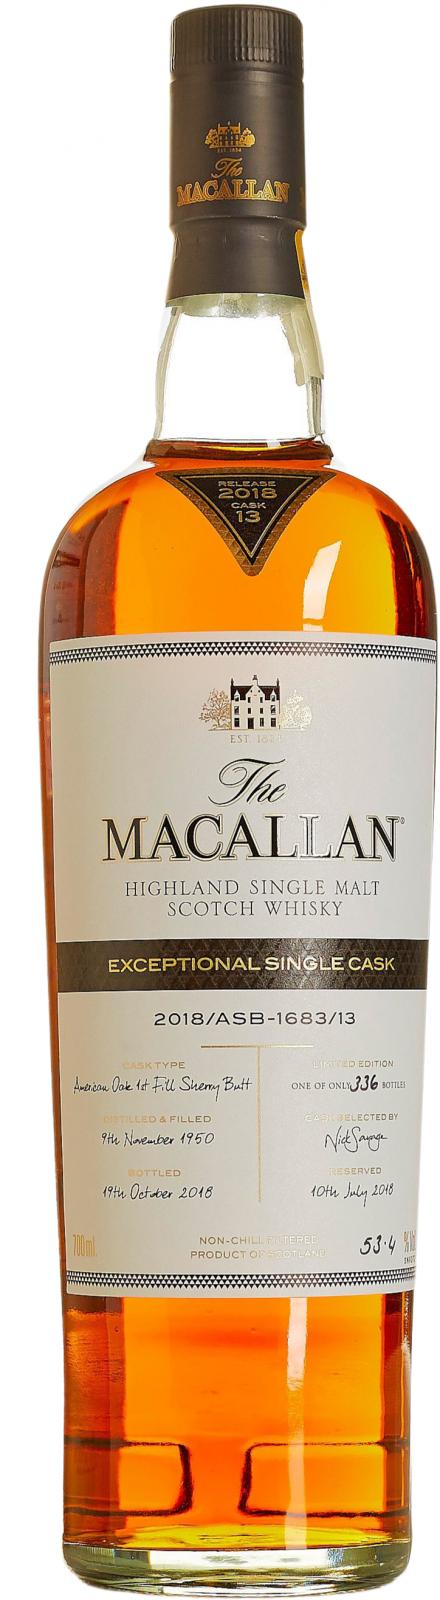 Macallan Exceptional Single Cask 2018/ASB - 1683/13 Single Malt Scotch Whisky